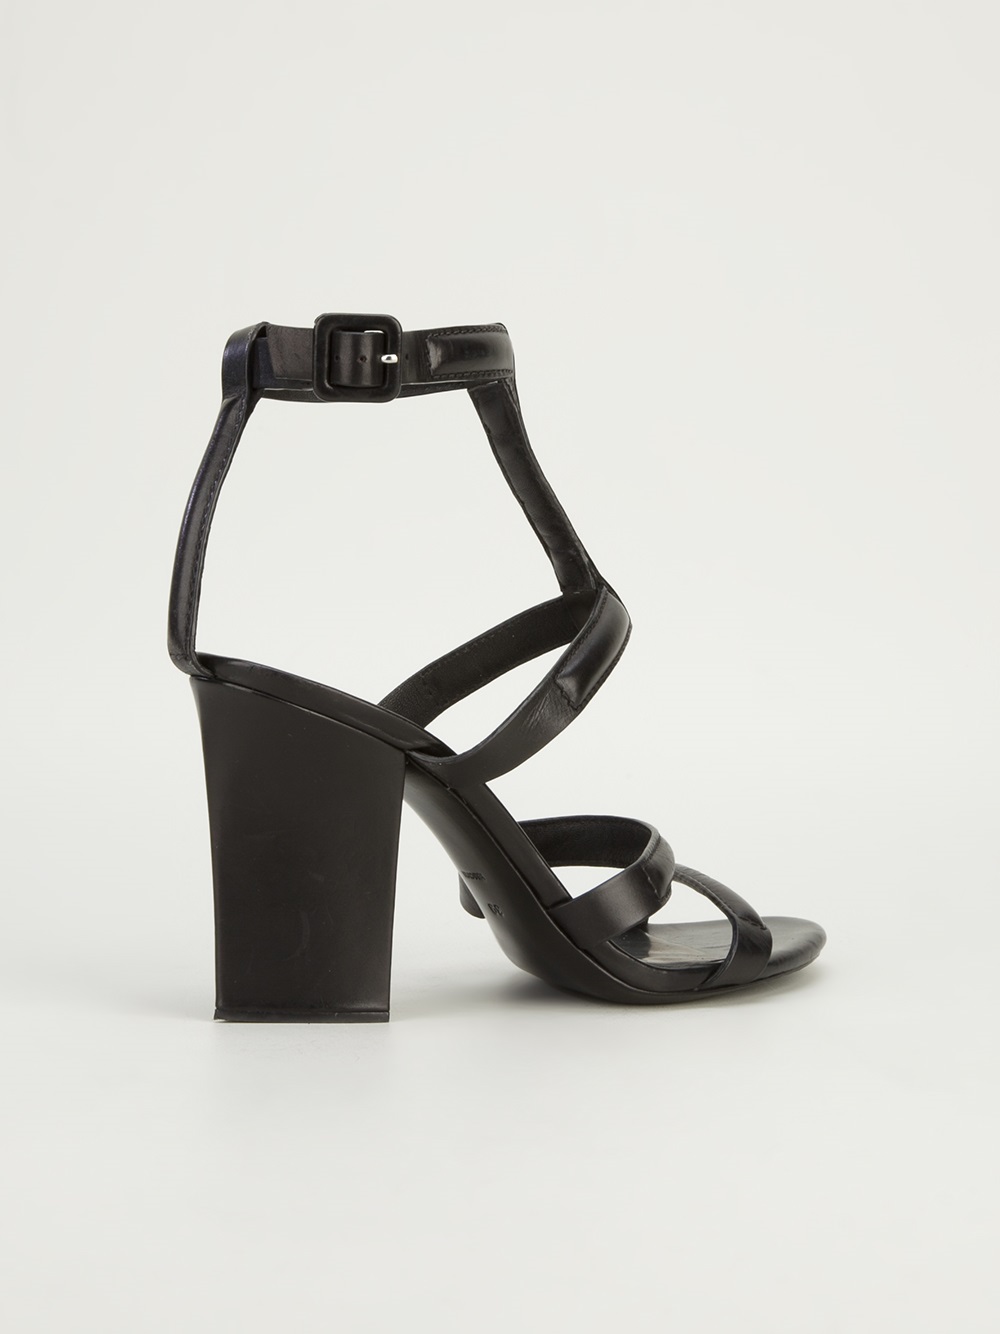 Lyst - Alexander Wang Strappy Chunky Heel Sandal in Black